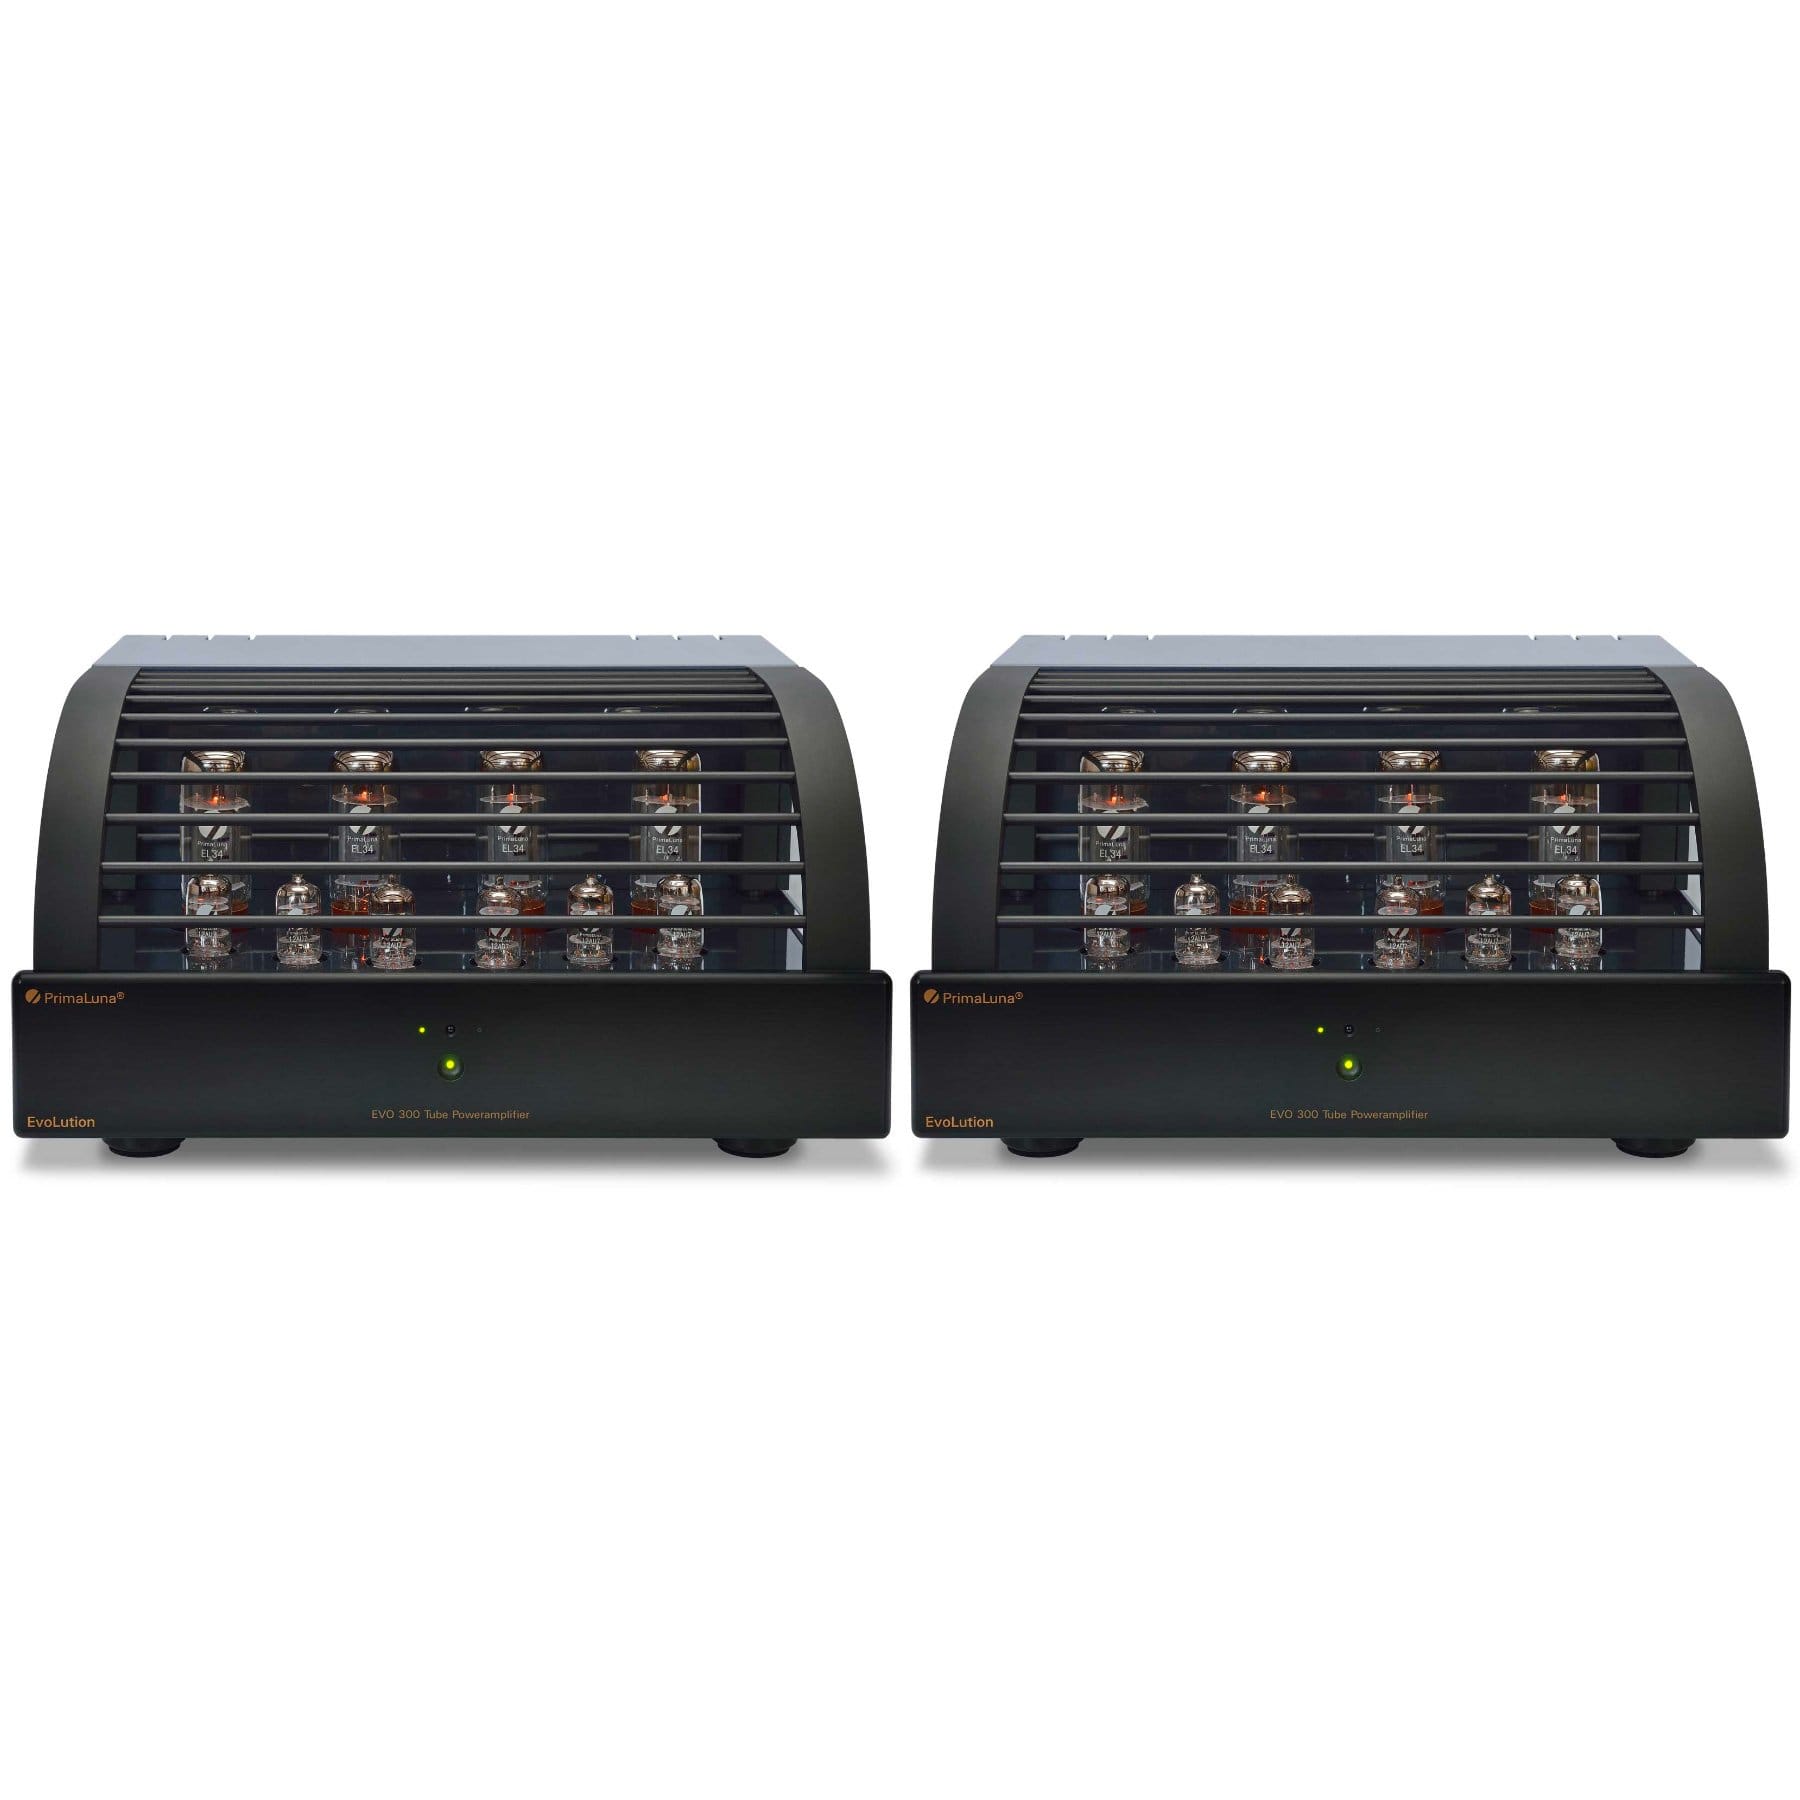 PrimaLuna EVO 300 Power Amplifier Monoblock (Pair)